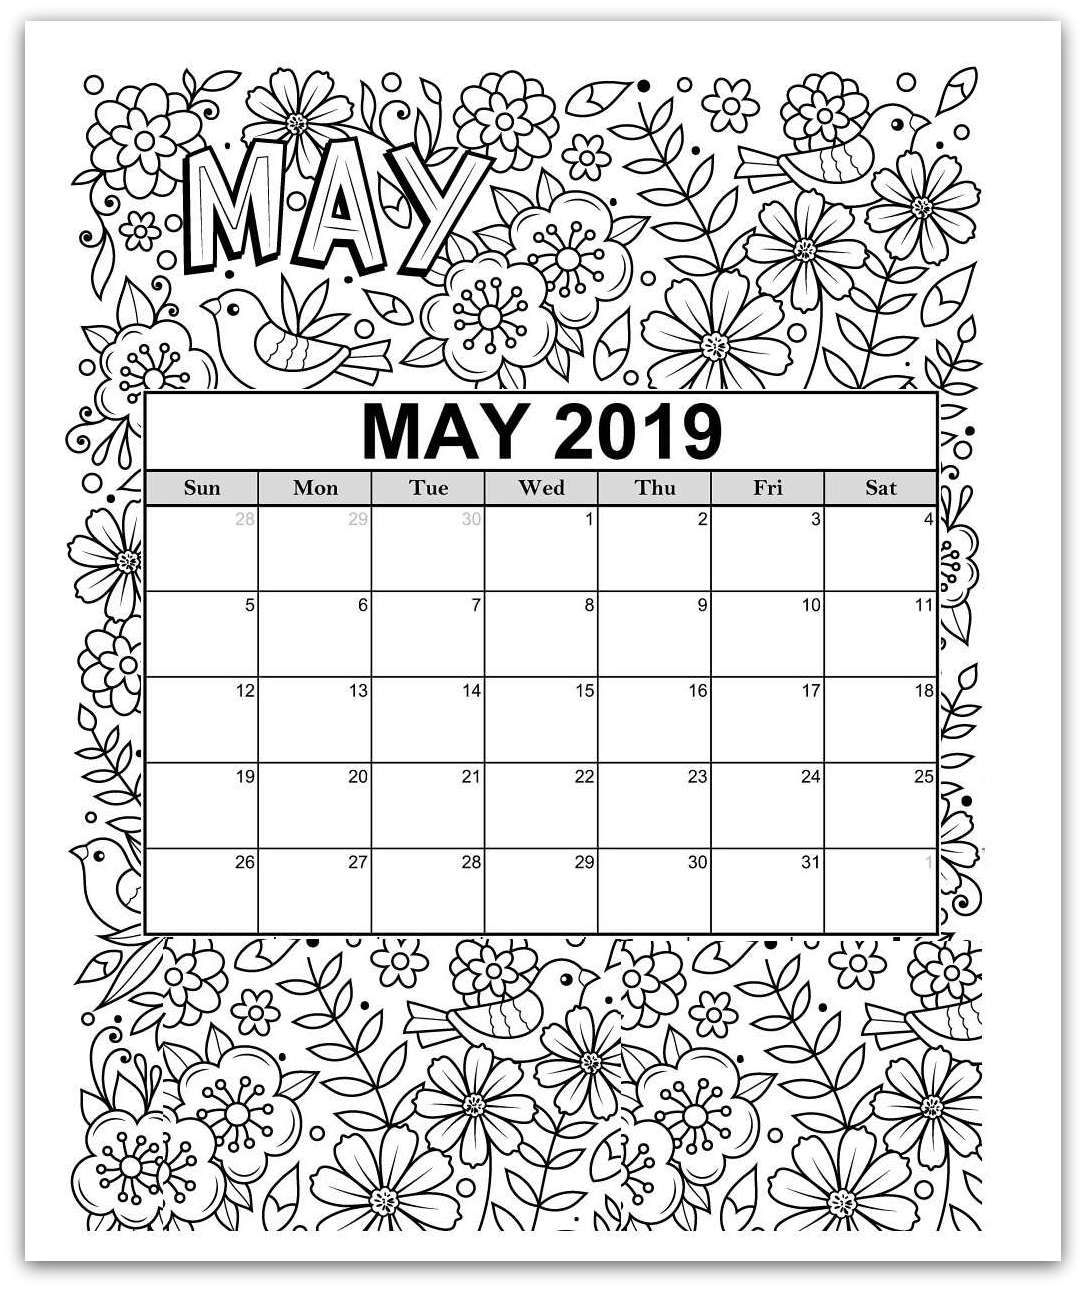 May 2019 Coloring Page Printable Calendar | Kids Calendar